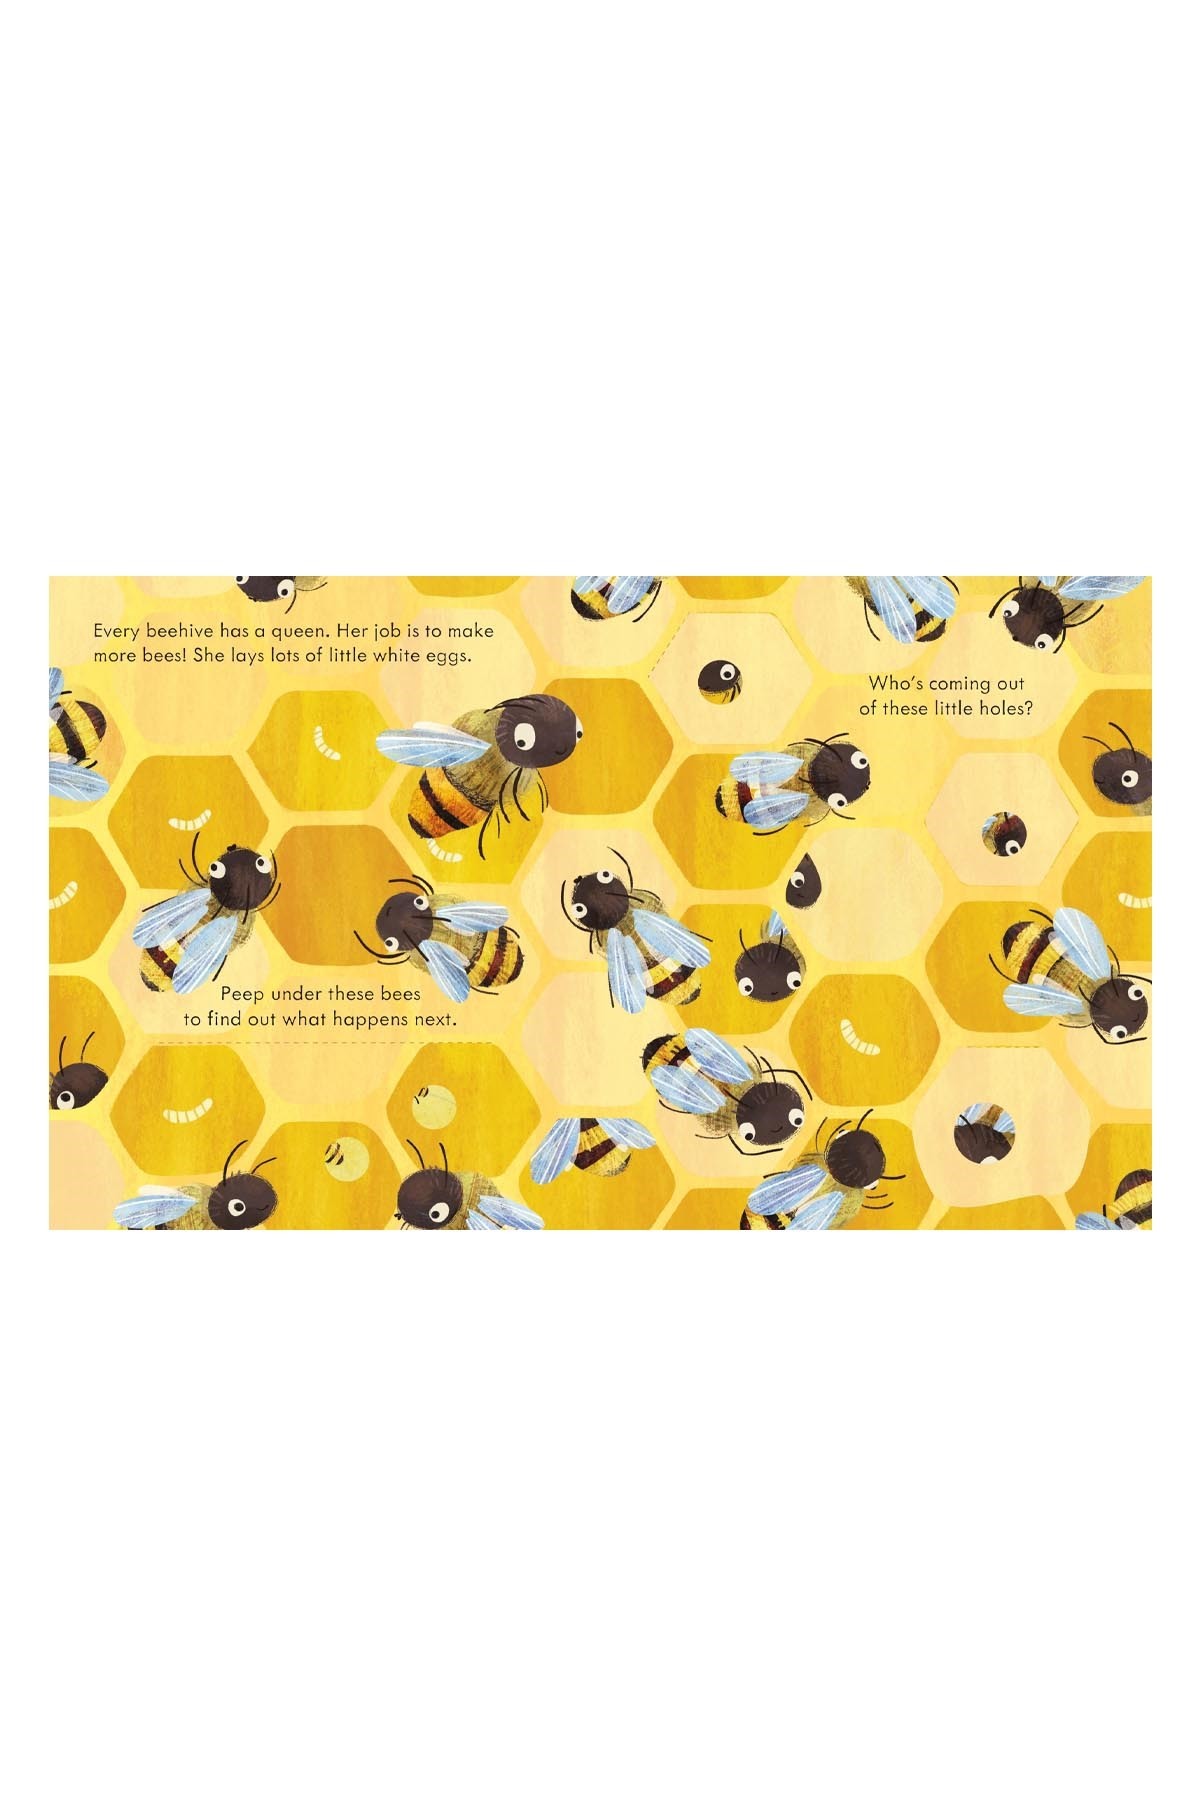 The Usborne Peep Inside a Beehive